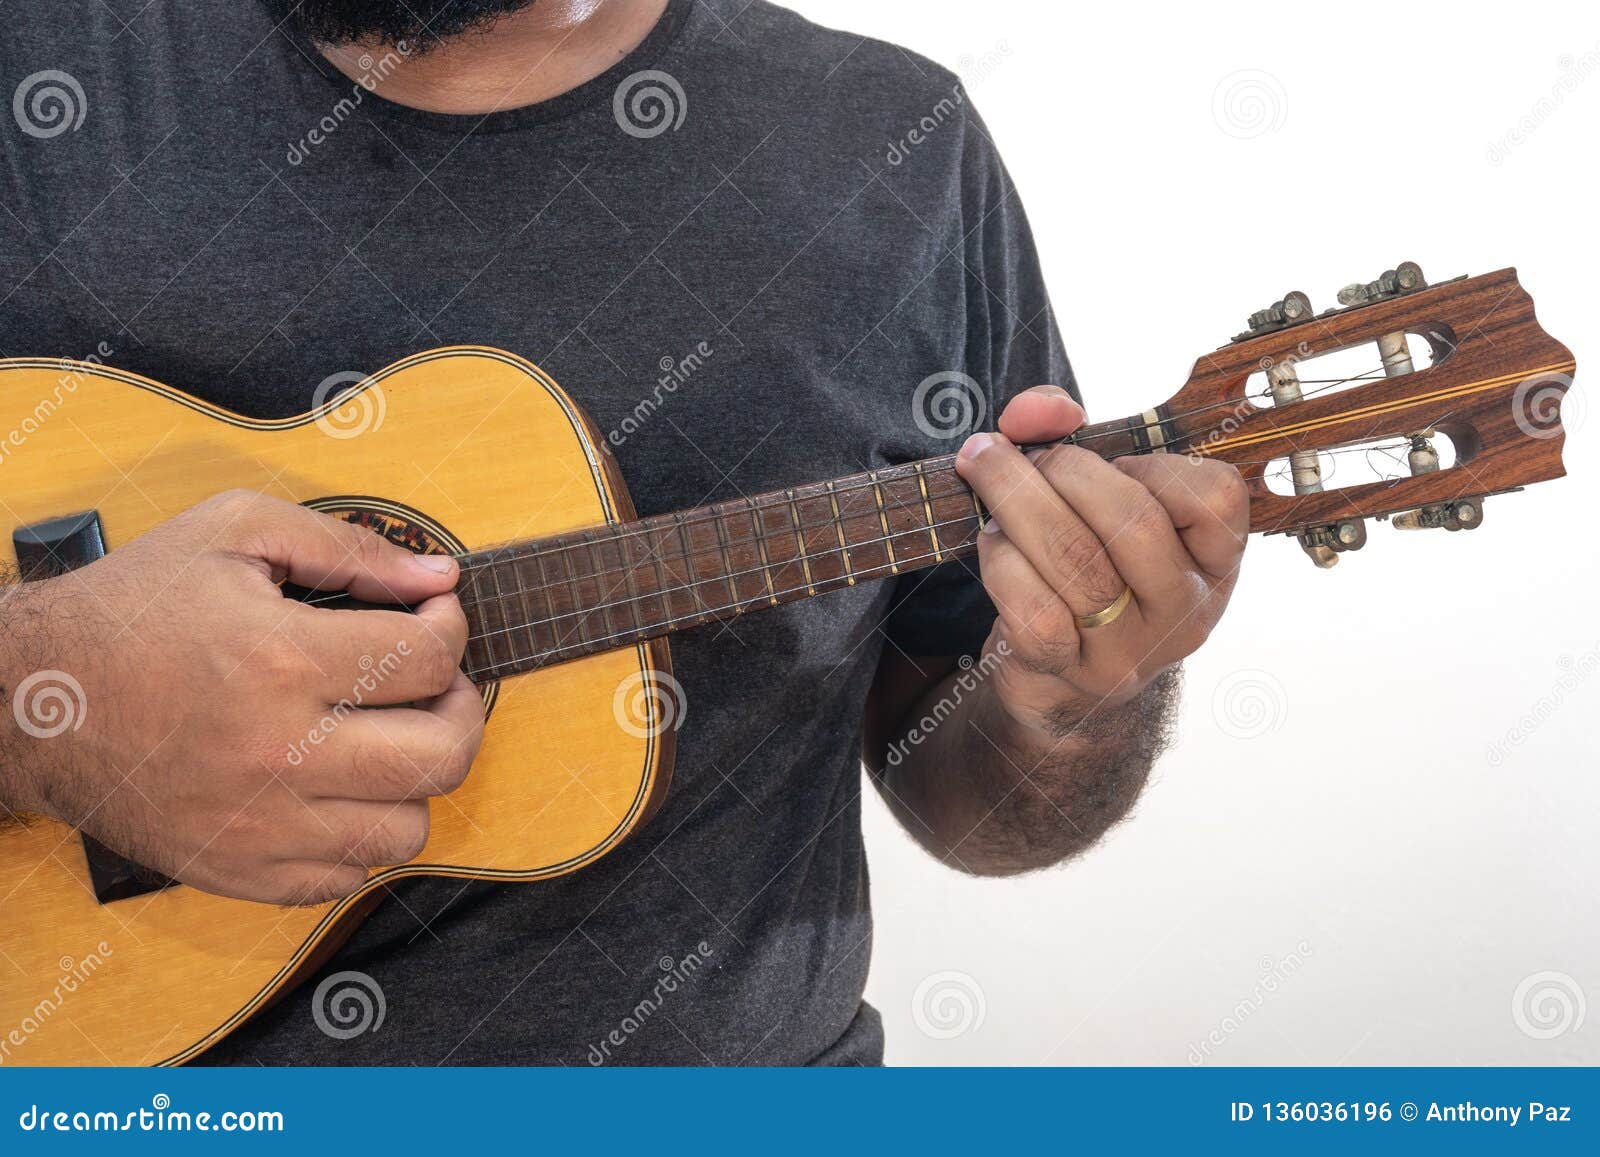 young man playing ukulele with shirt and black pants